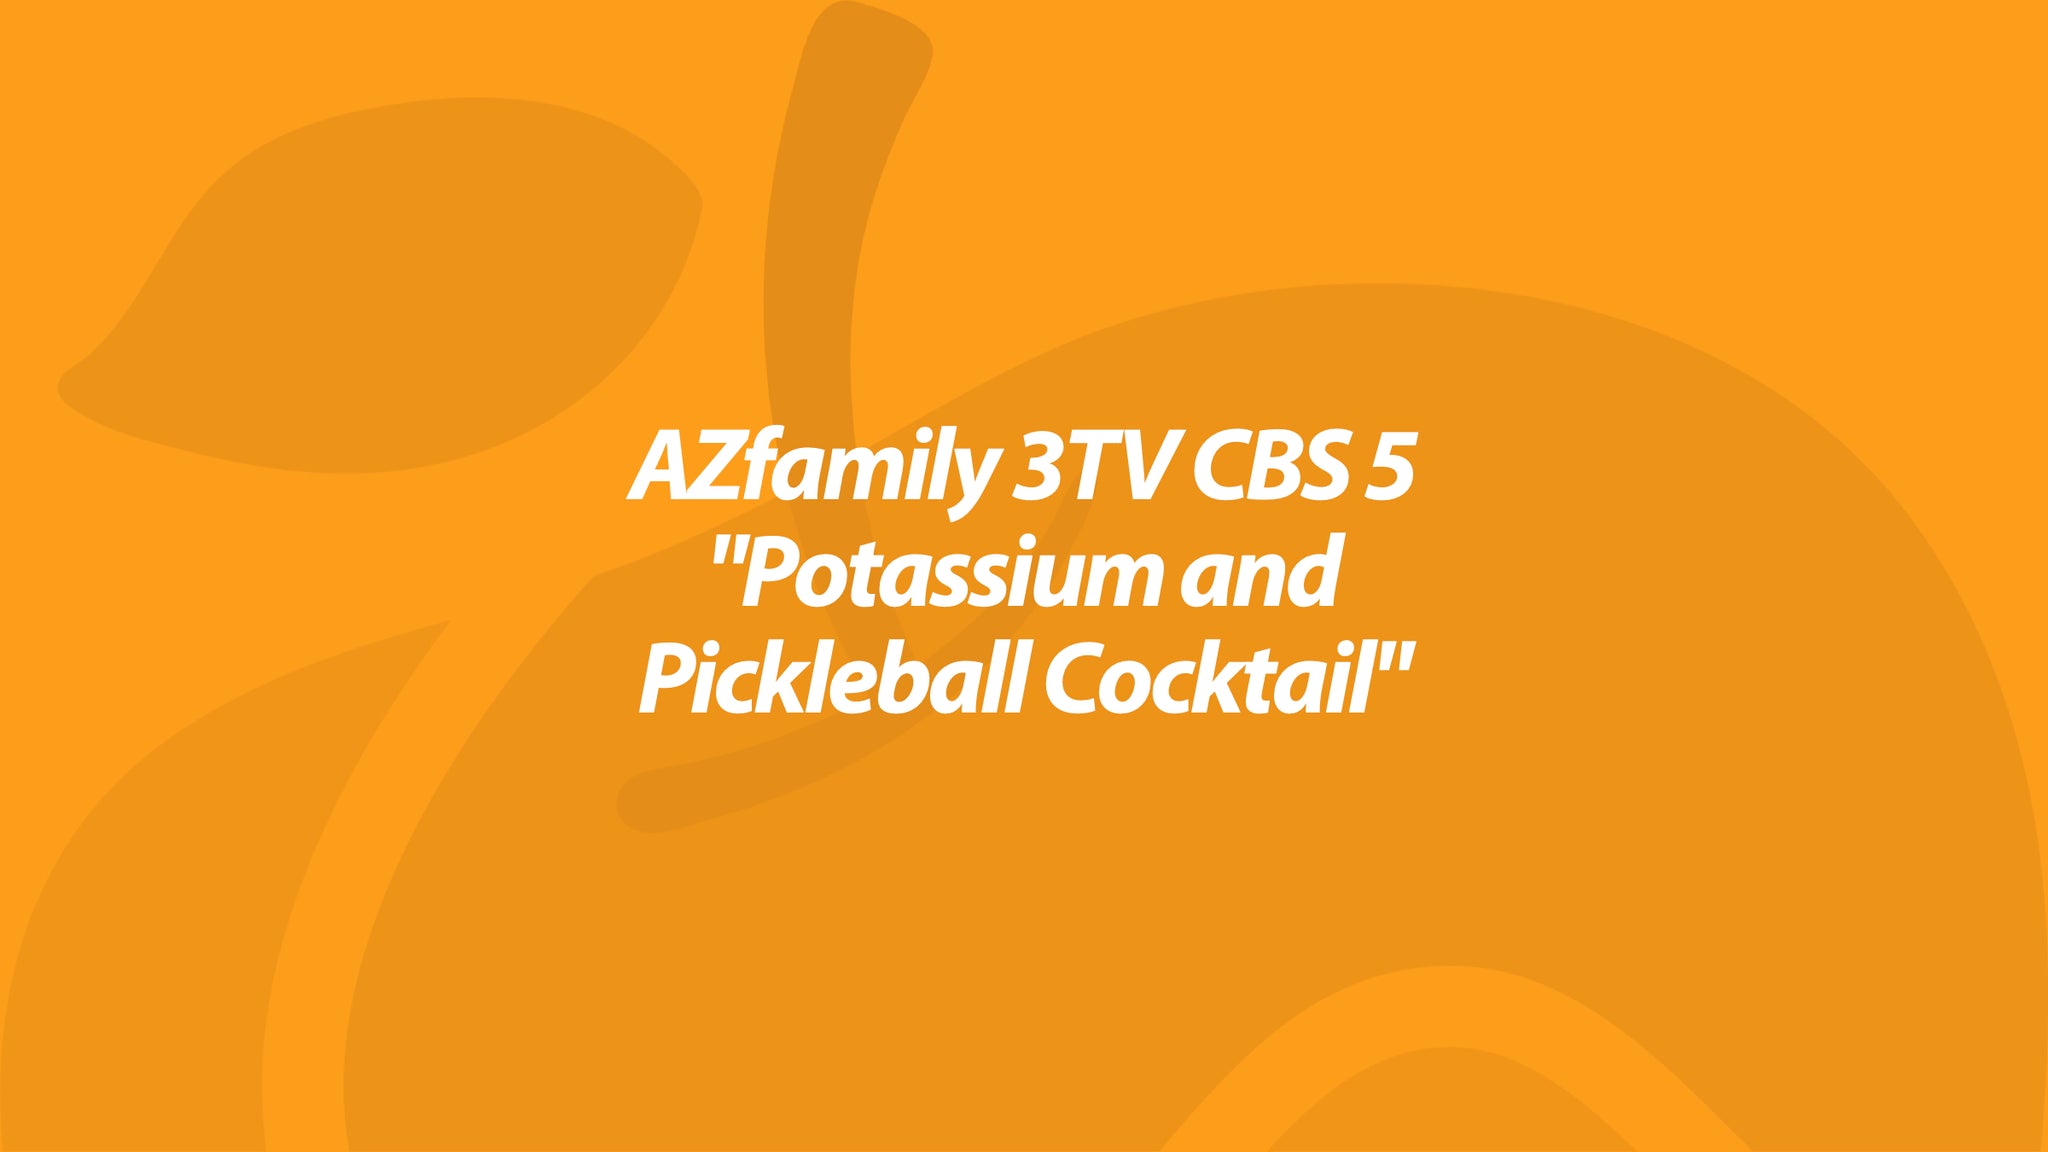 AZfamily 3TV CBS 5 "Potassium and Pickleball Cocktail"